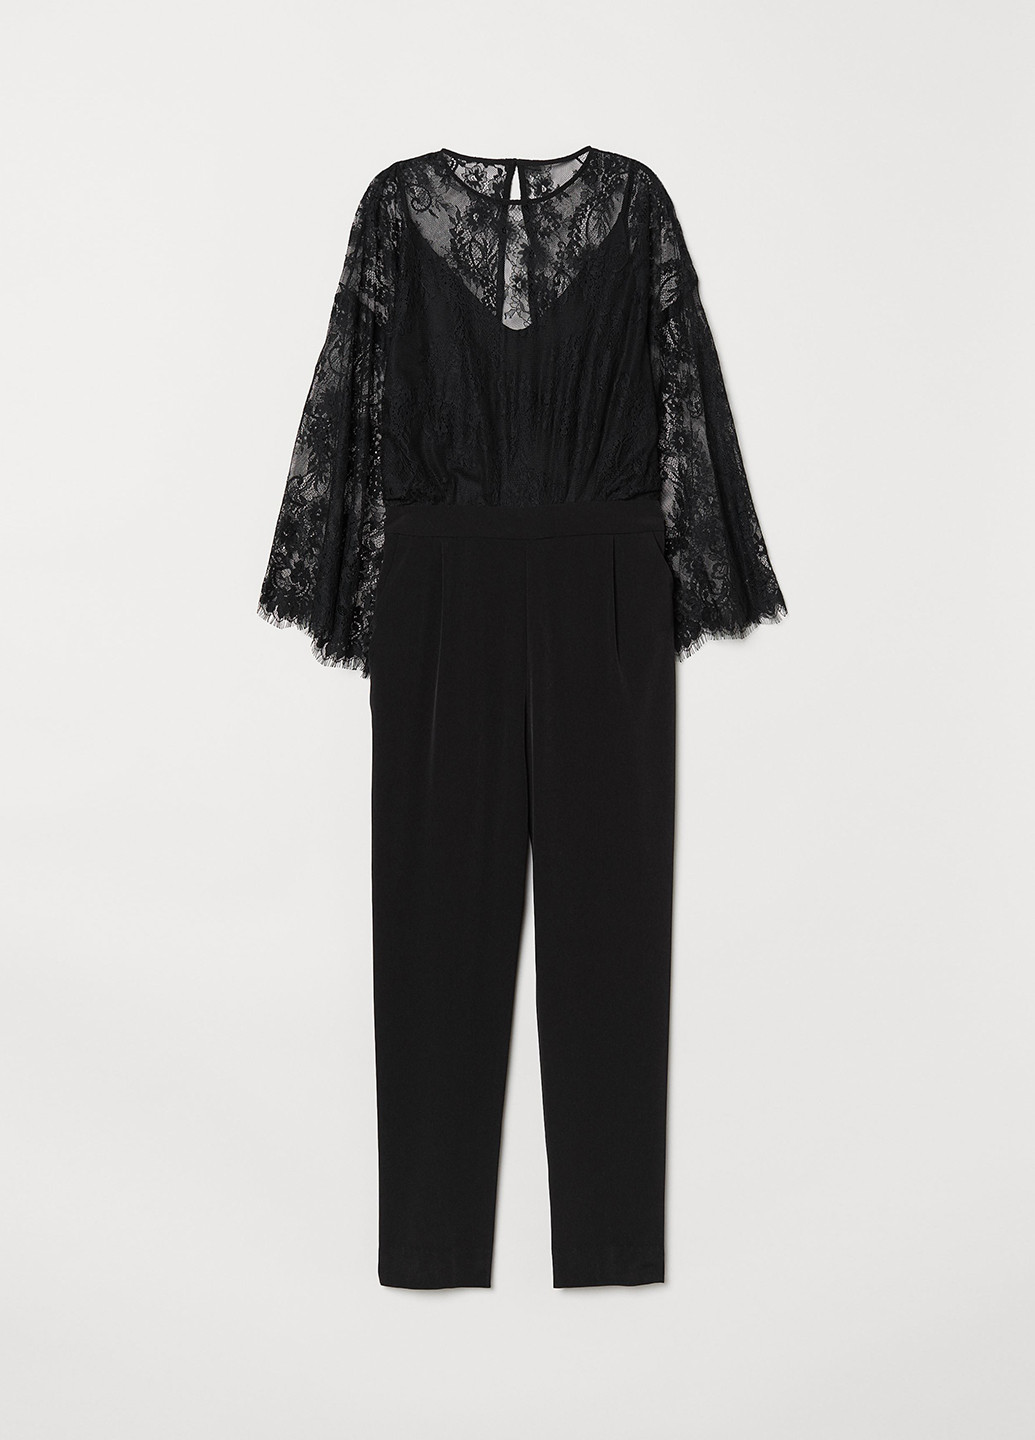 Комбинезон H&M комбинезон-брюки чёрный кэжуал полиэстер, кружево, гипюр